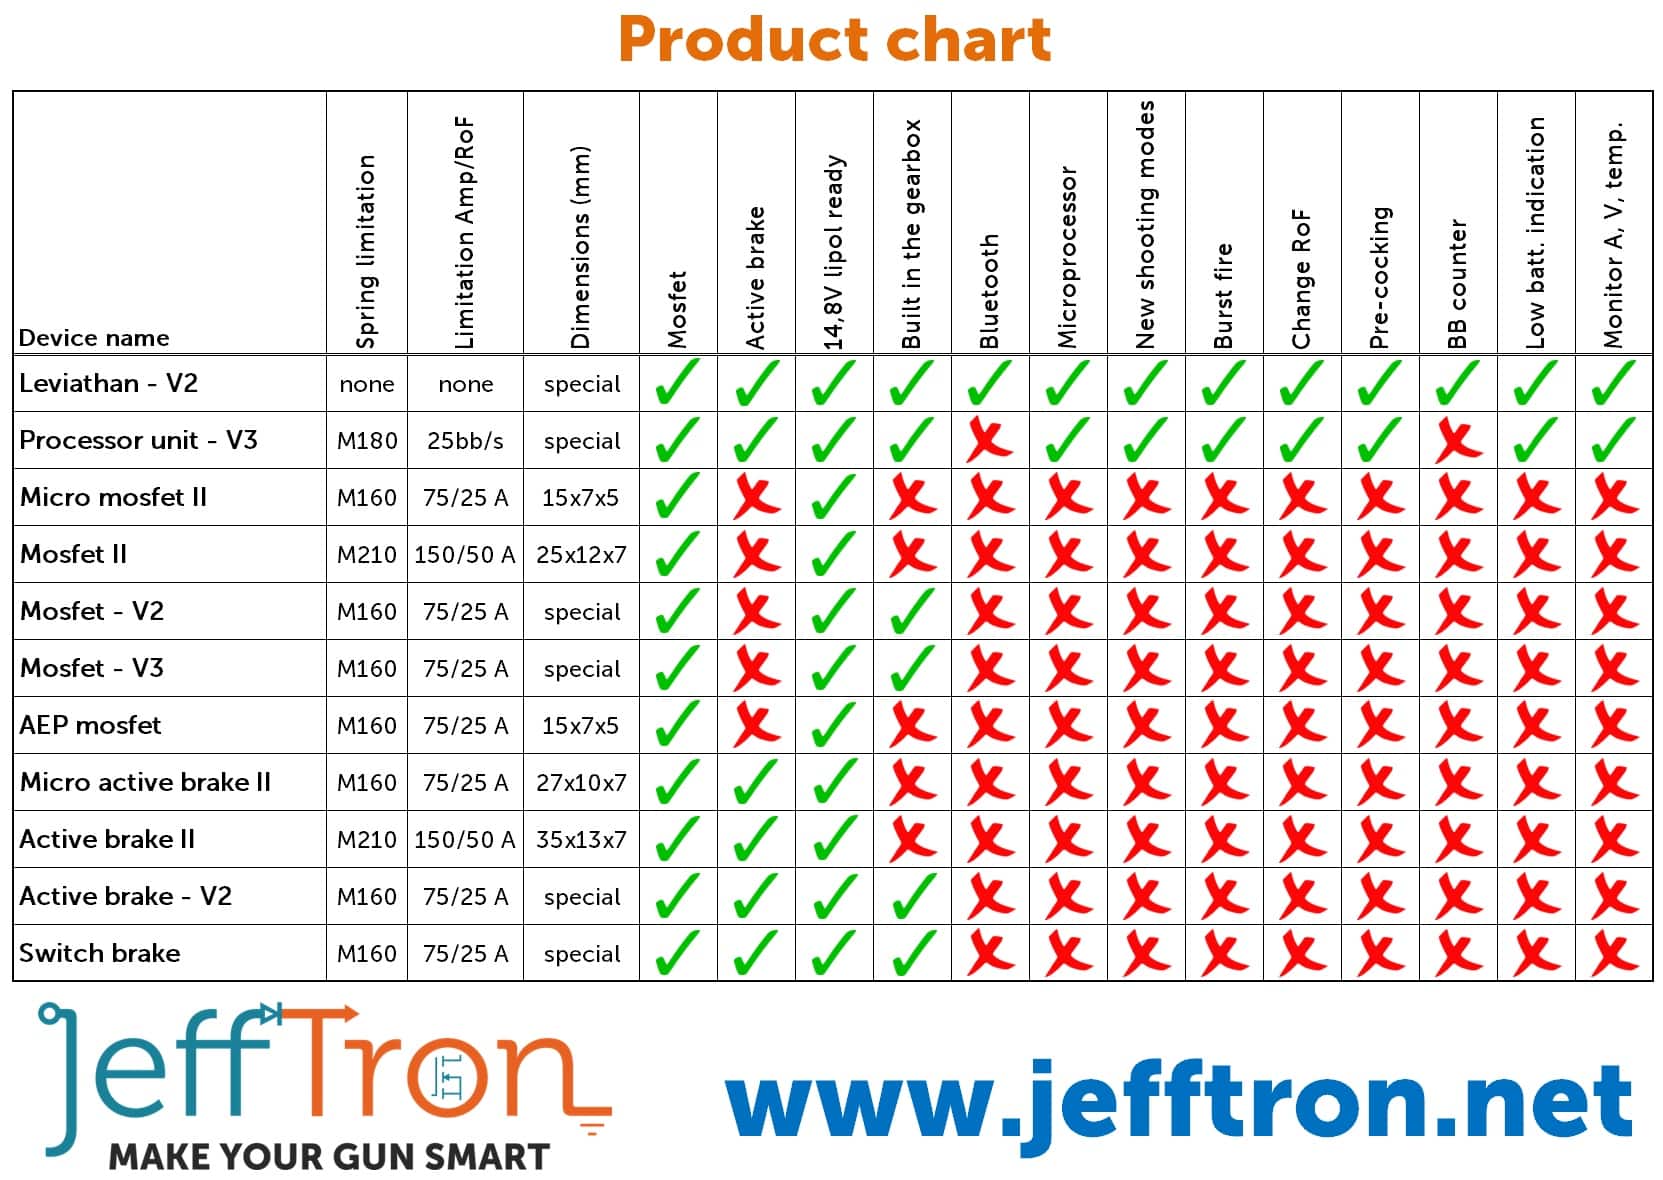 Jefftron Micro active brake II with wiring